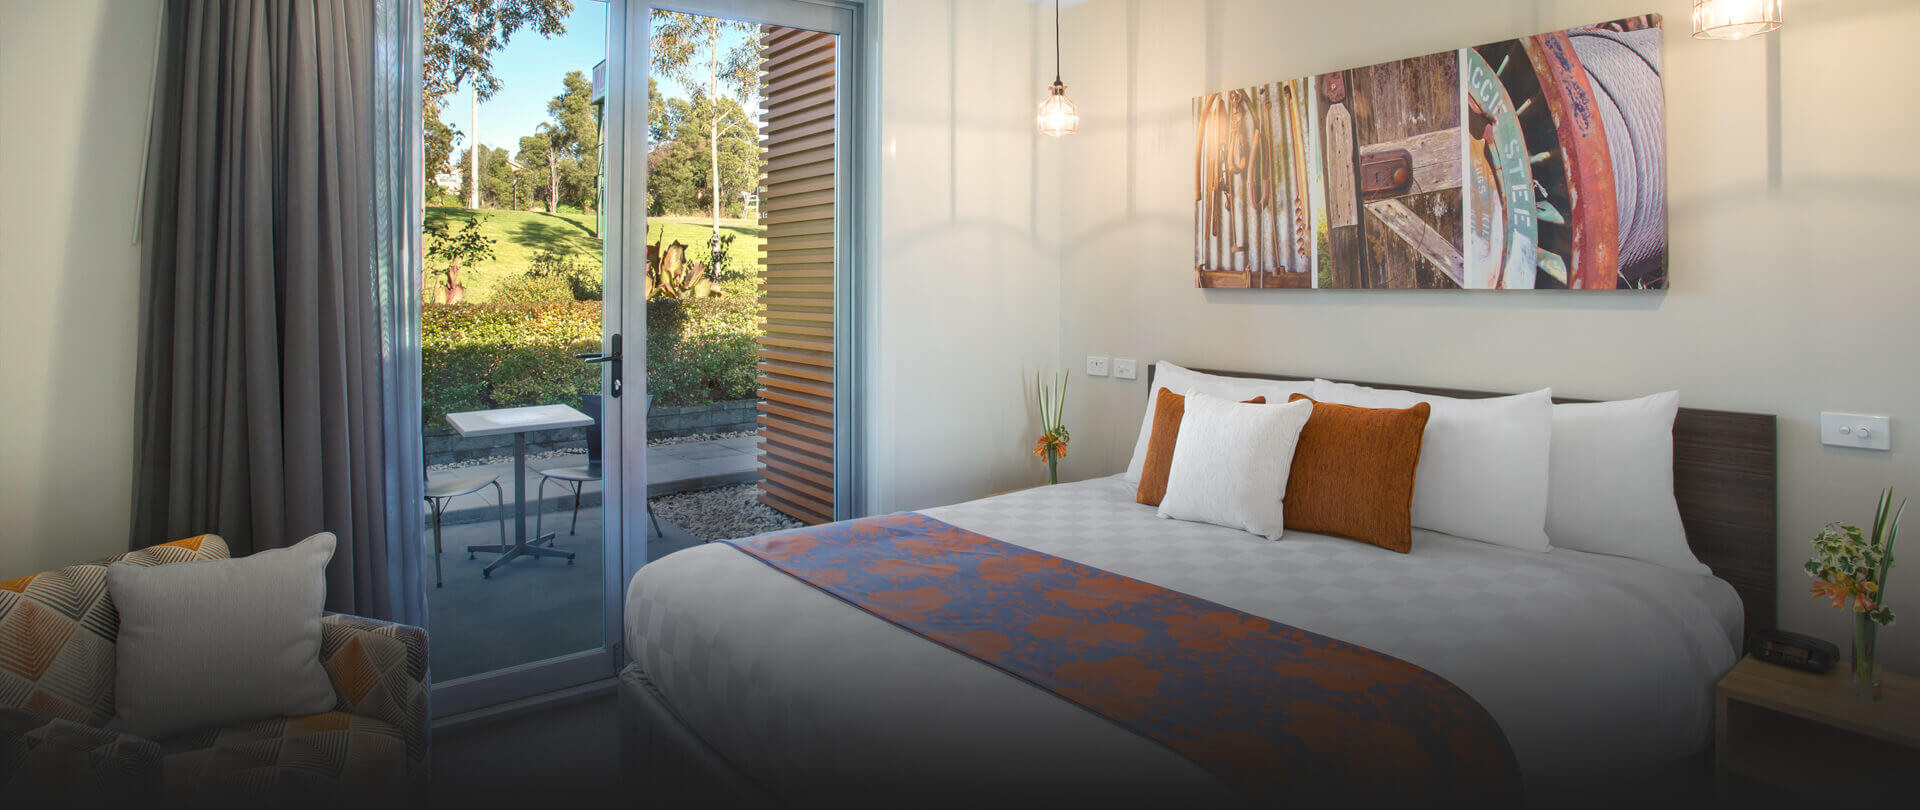 Discount [60% Off] Comfort Inn Suites Warragul Australia ...